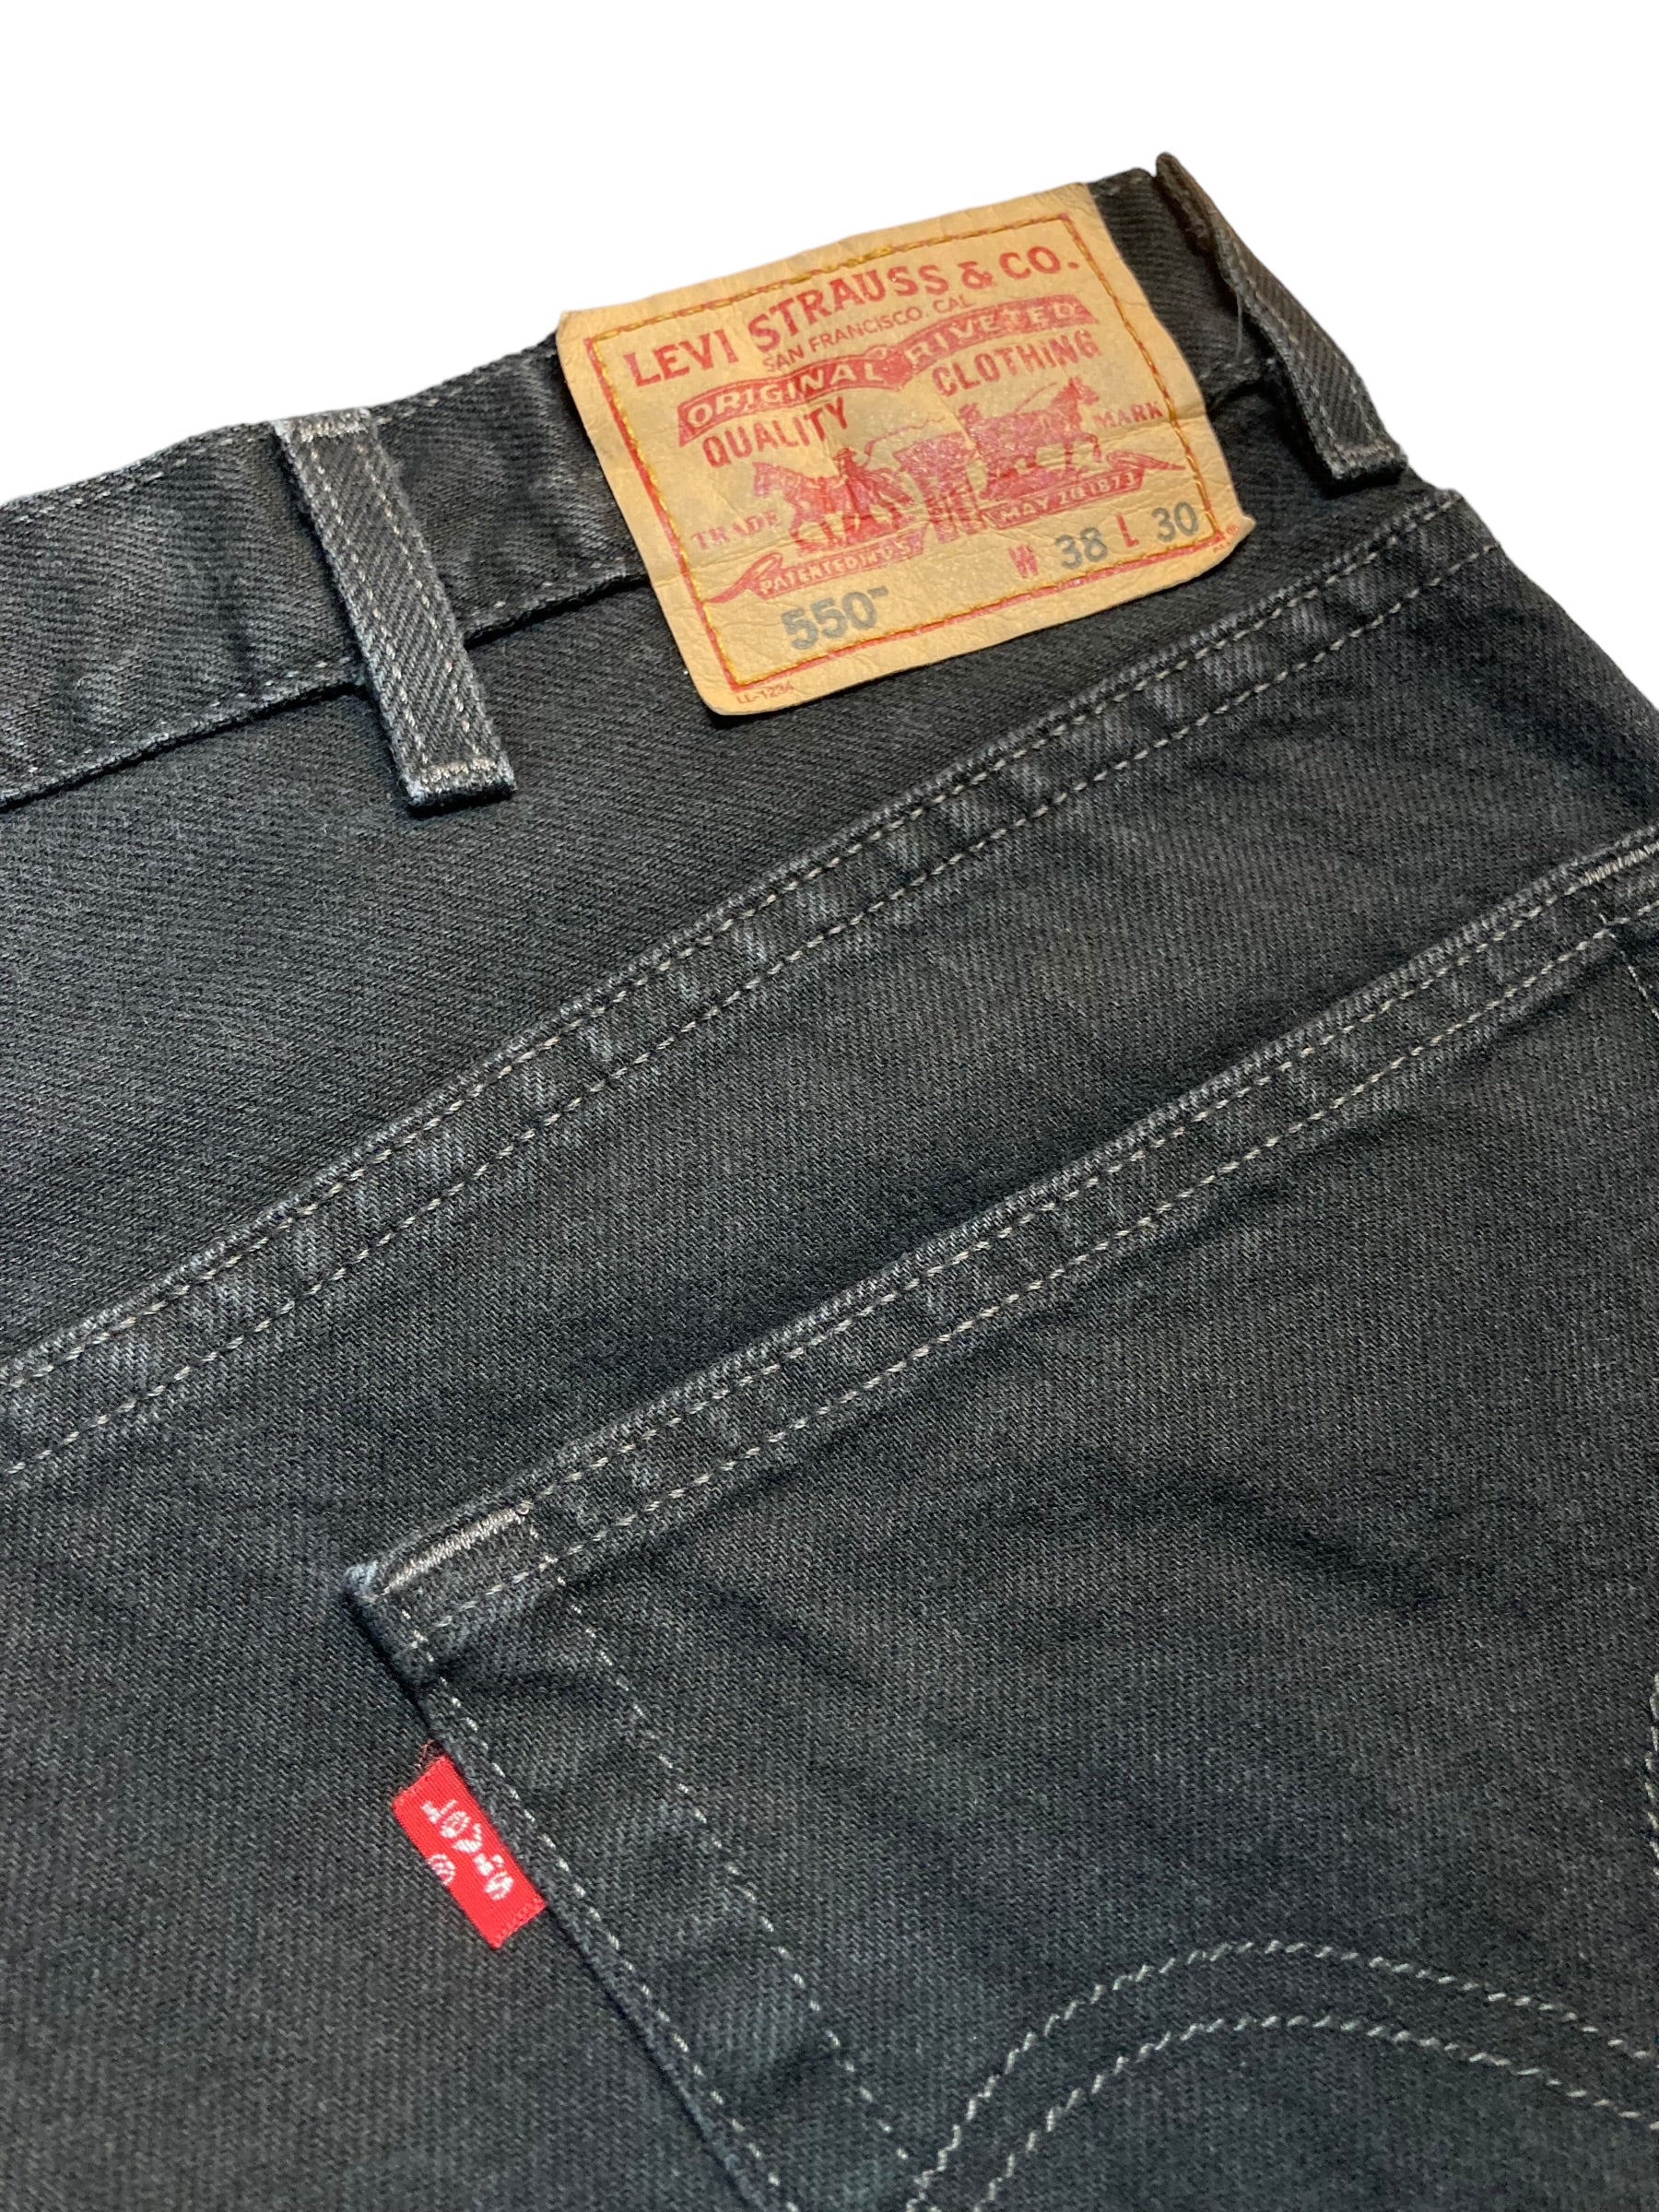 FLEXHOOD Destroy Micro Rag Jeans XLサイズ千尋の夢取り扱い一覧